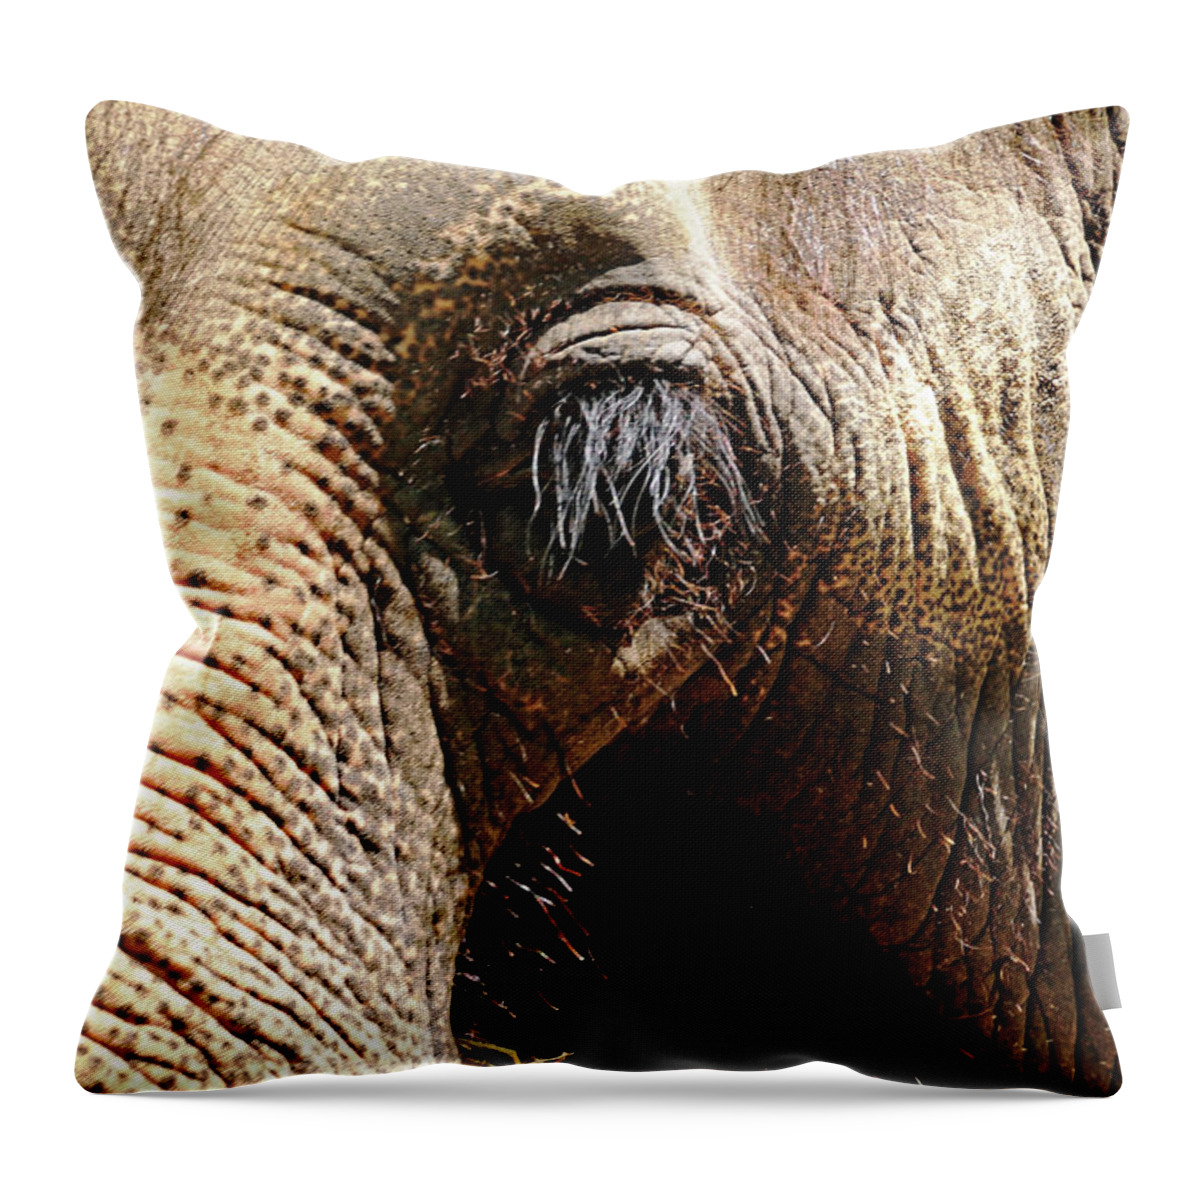 Elephant Throw Pillow featuring the photograph Elephant Eye by Debbie Oppermann